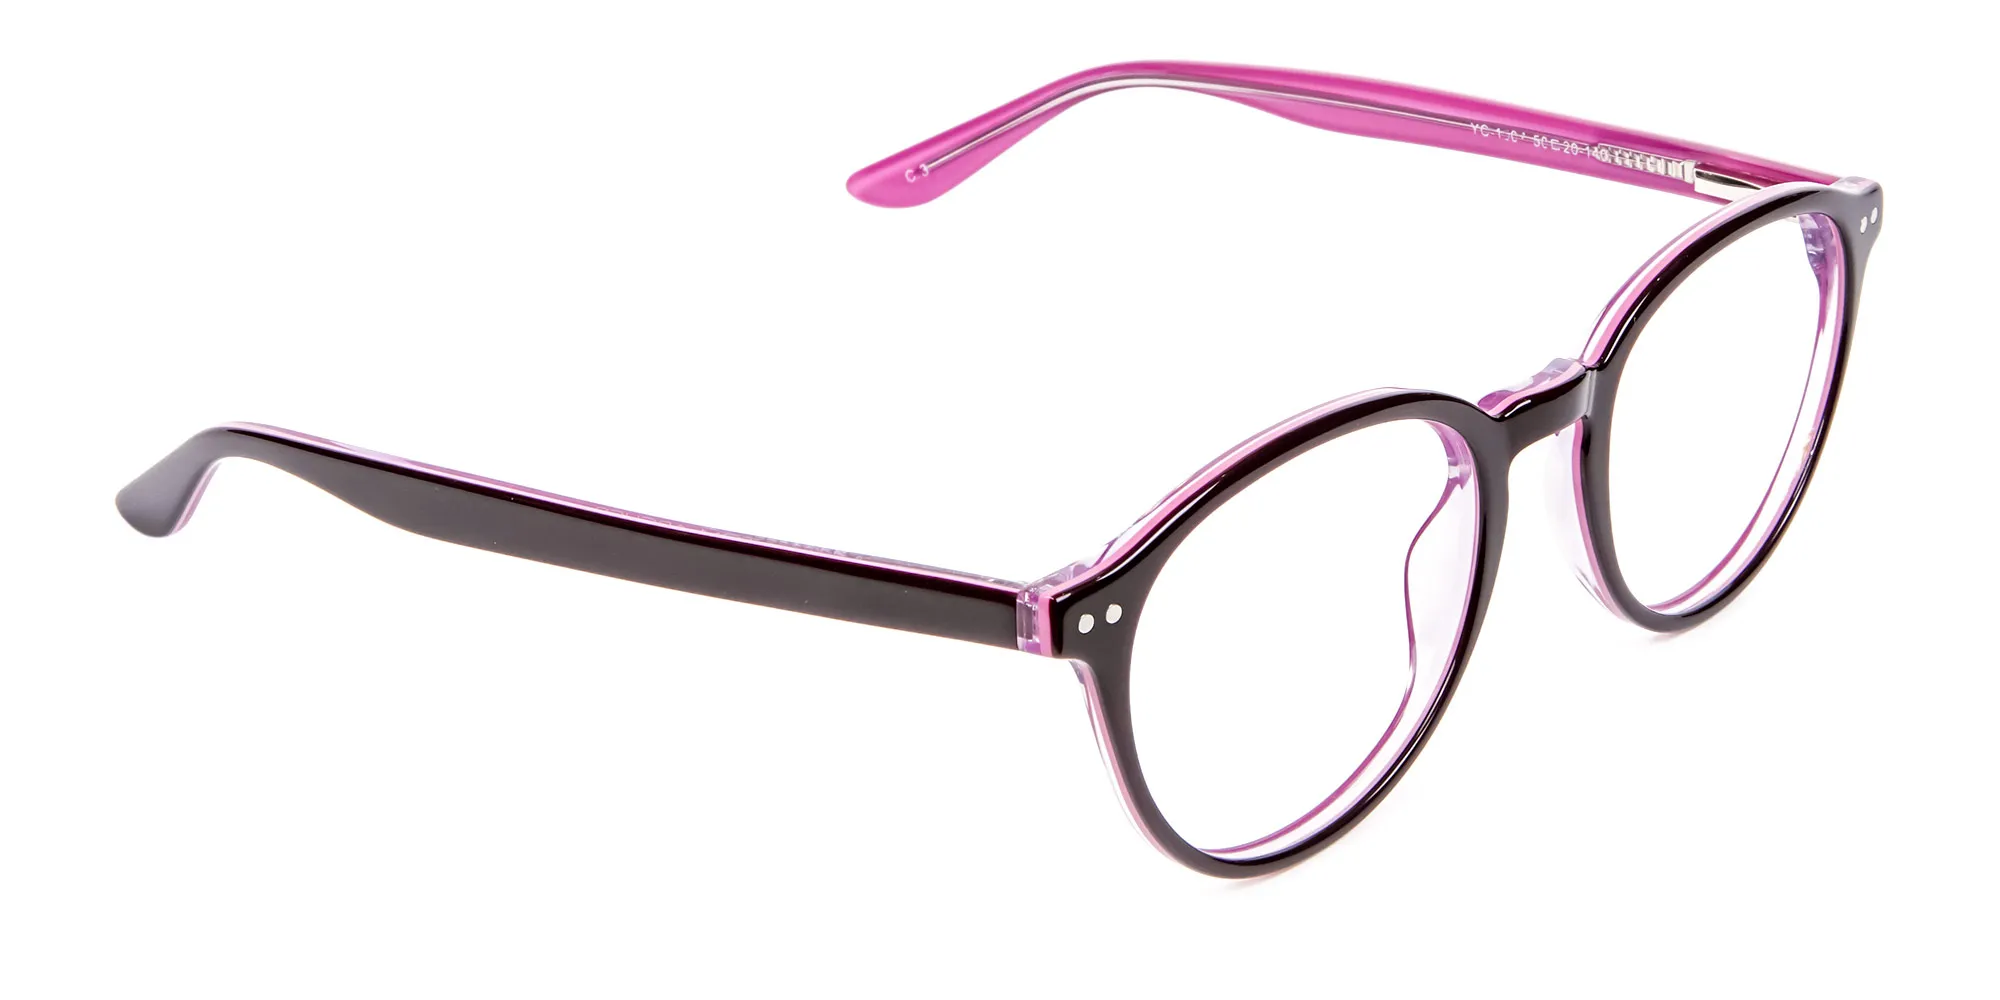 Ladies' Pink Round Glasses - 2